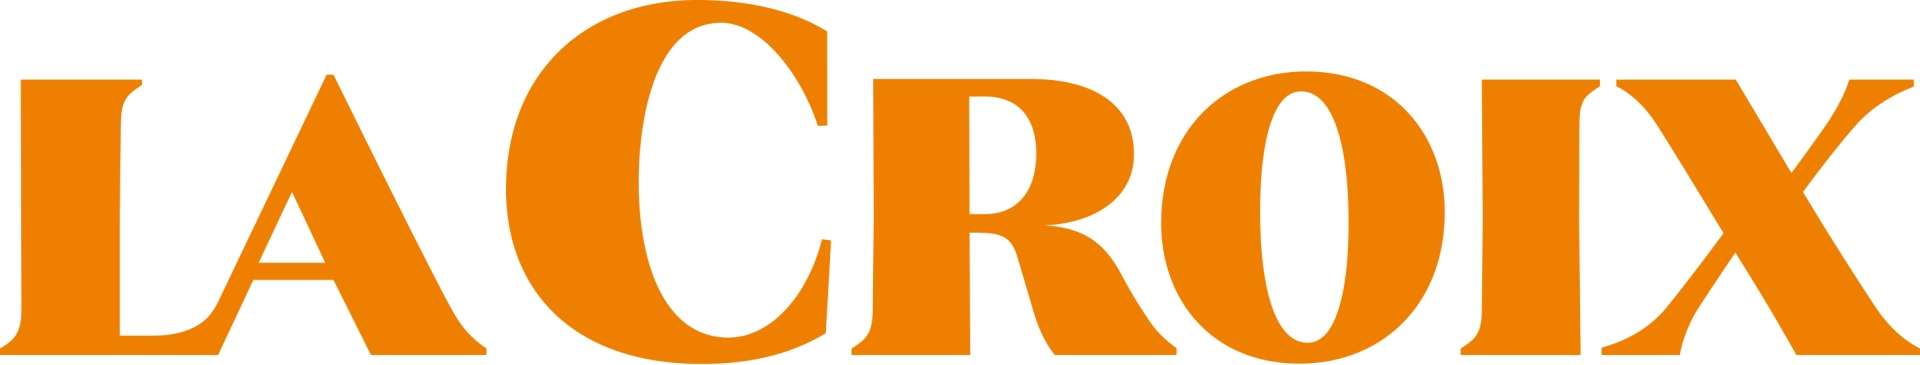 logo-lacroix-2016-orange.jpg